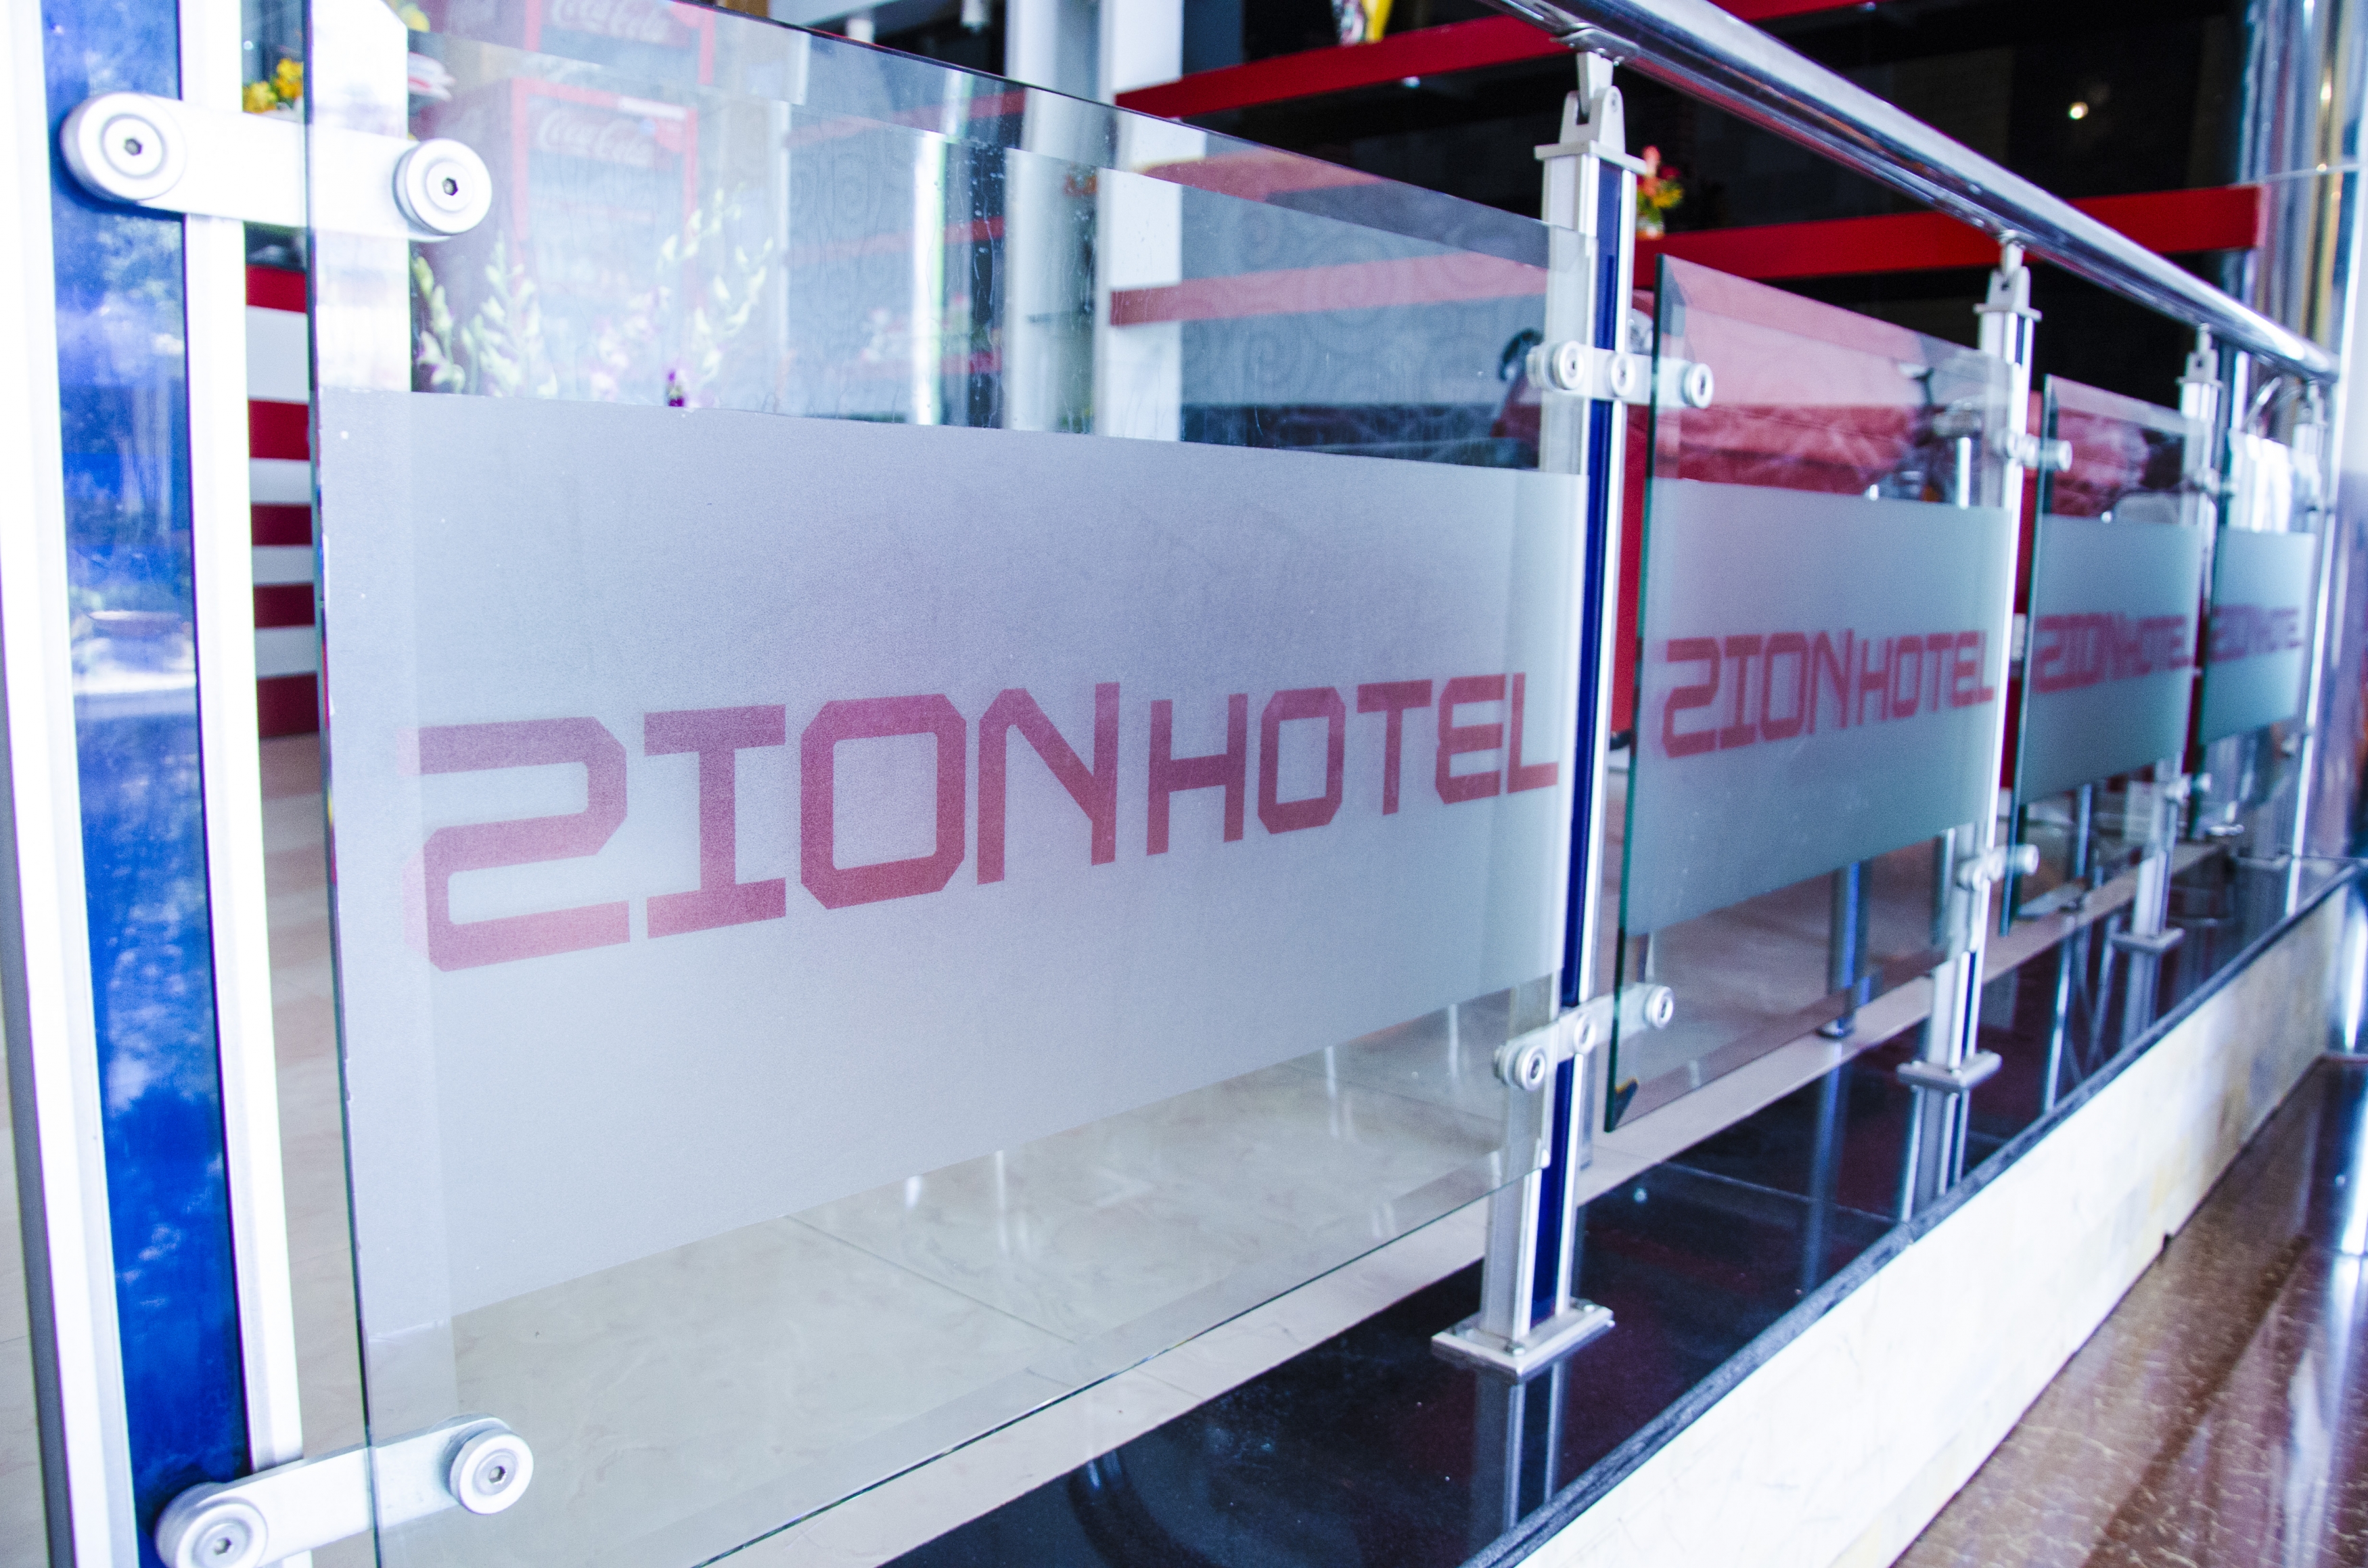 Zion Hotels 3